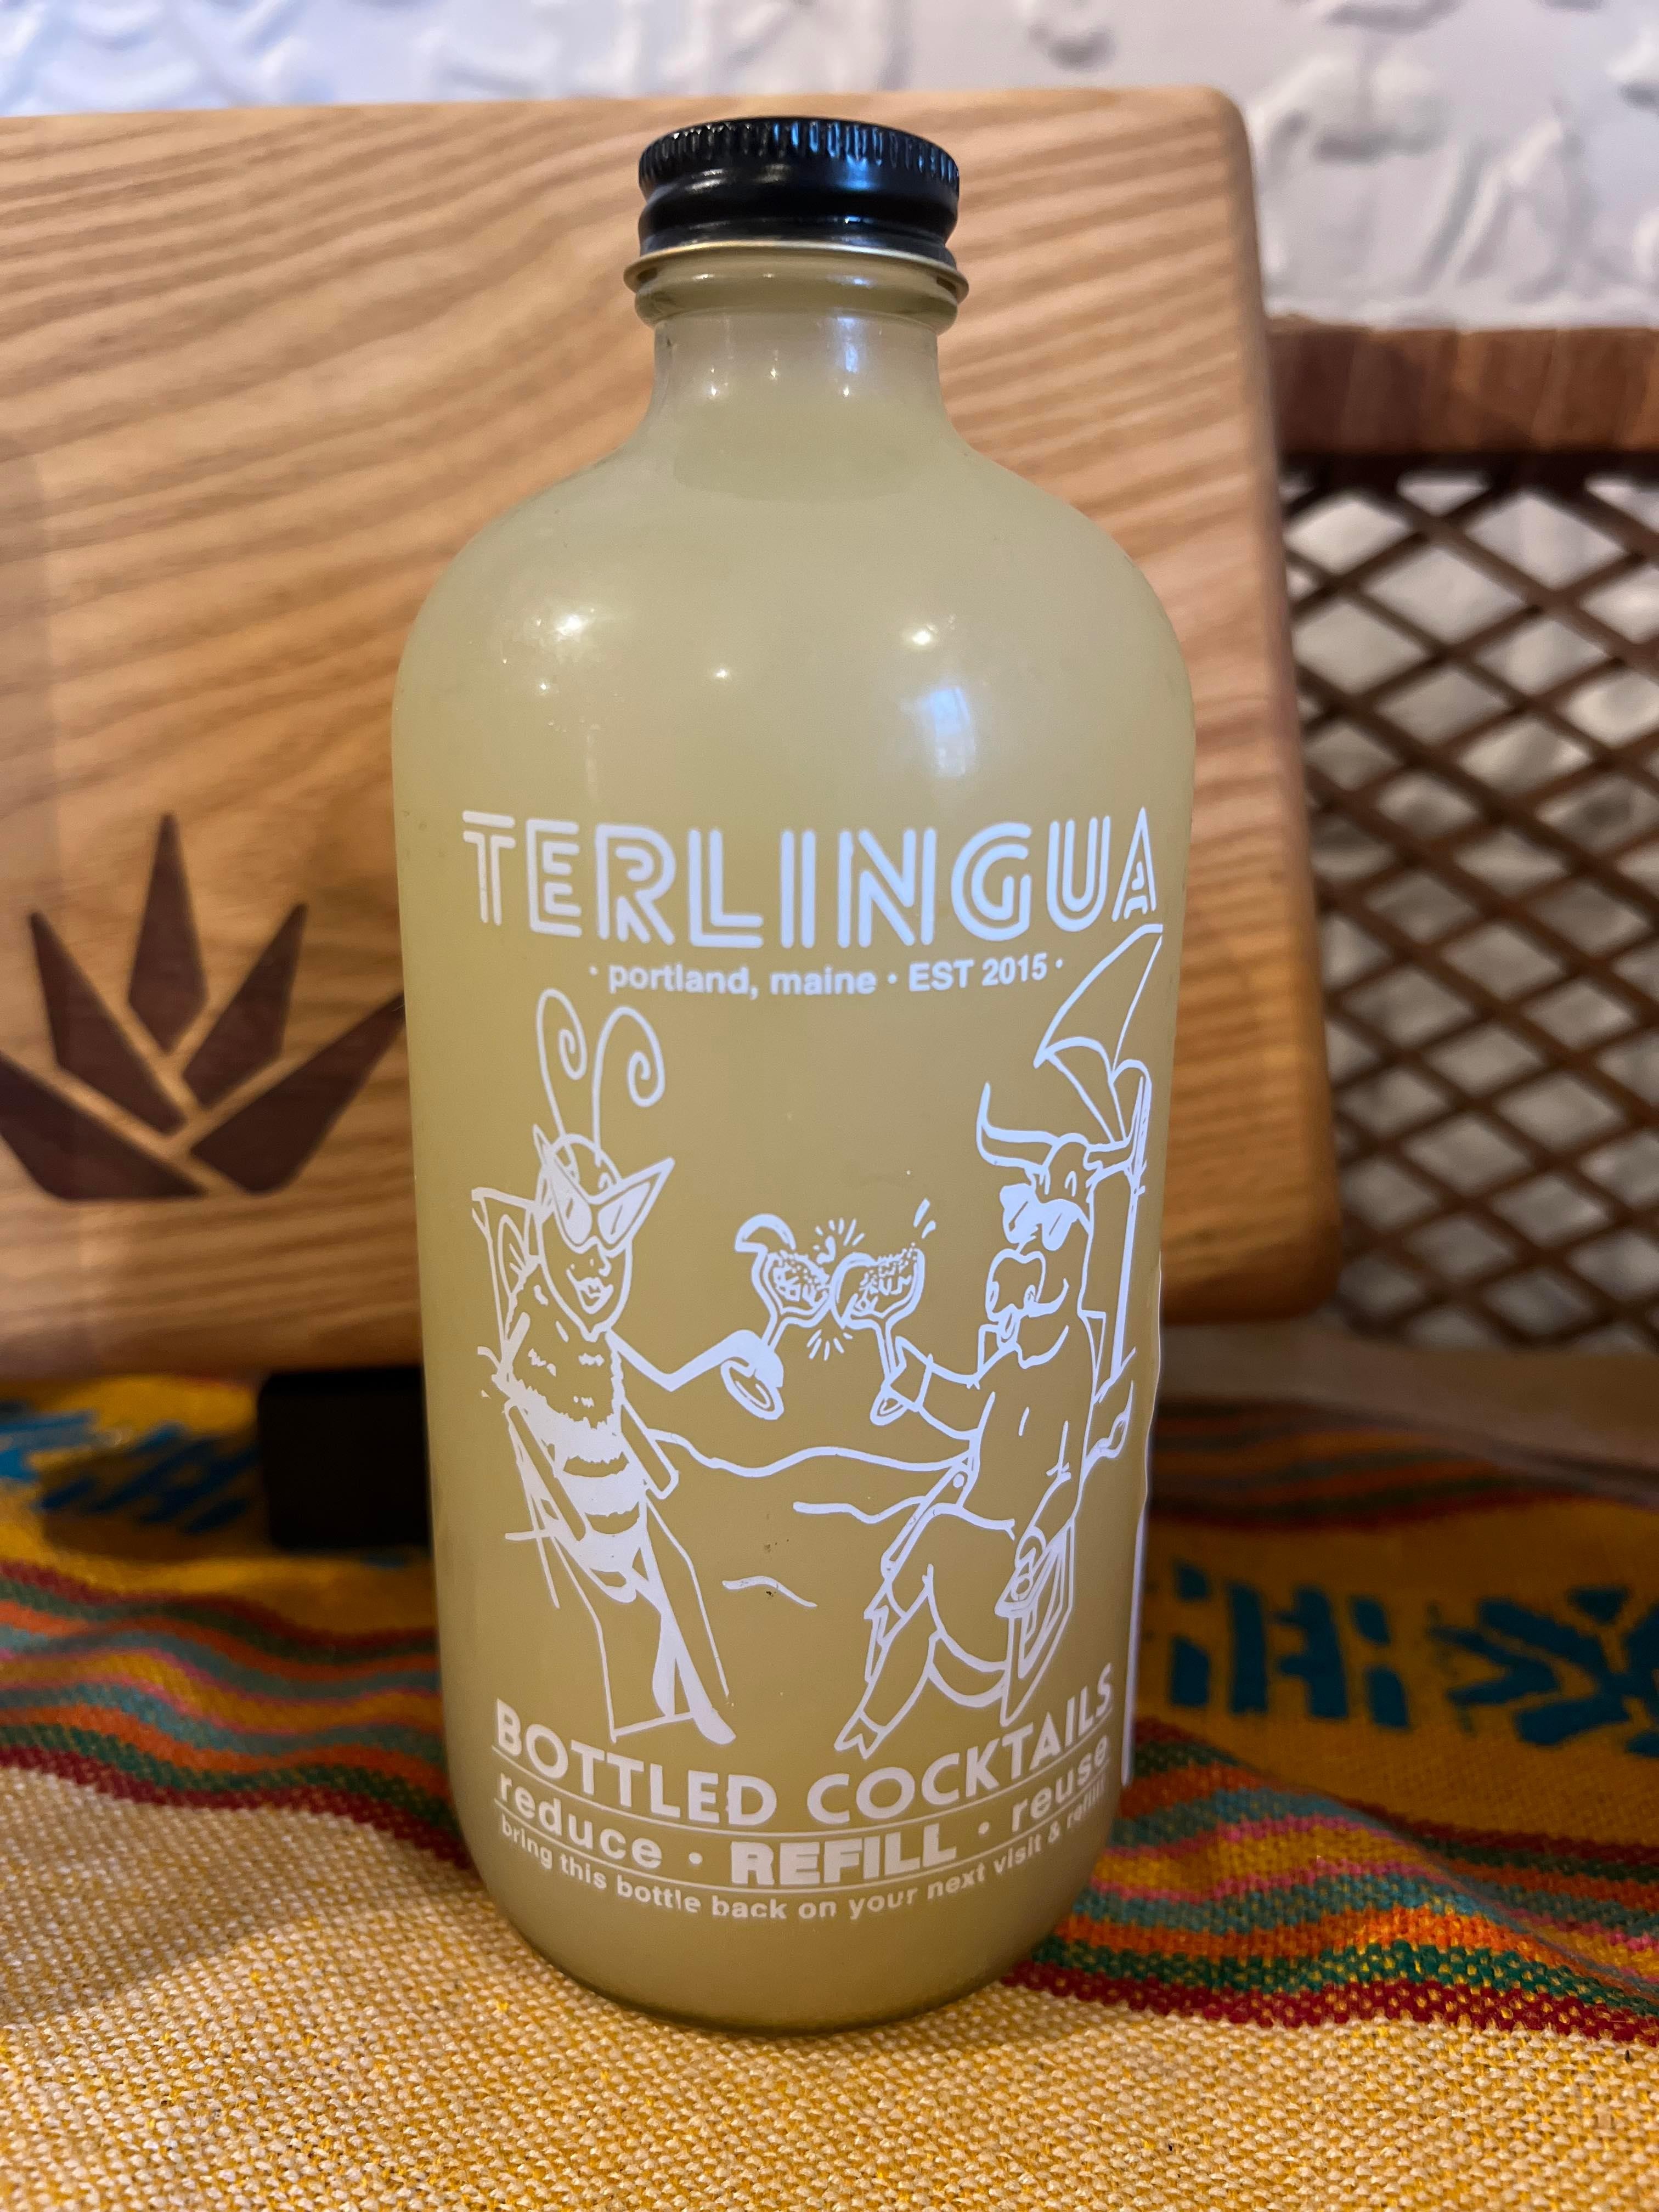 *Terlingua Margarita for 2